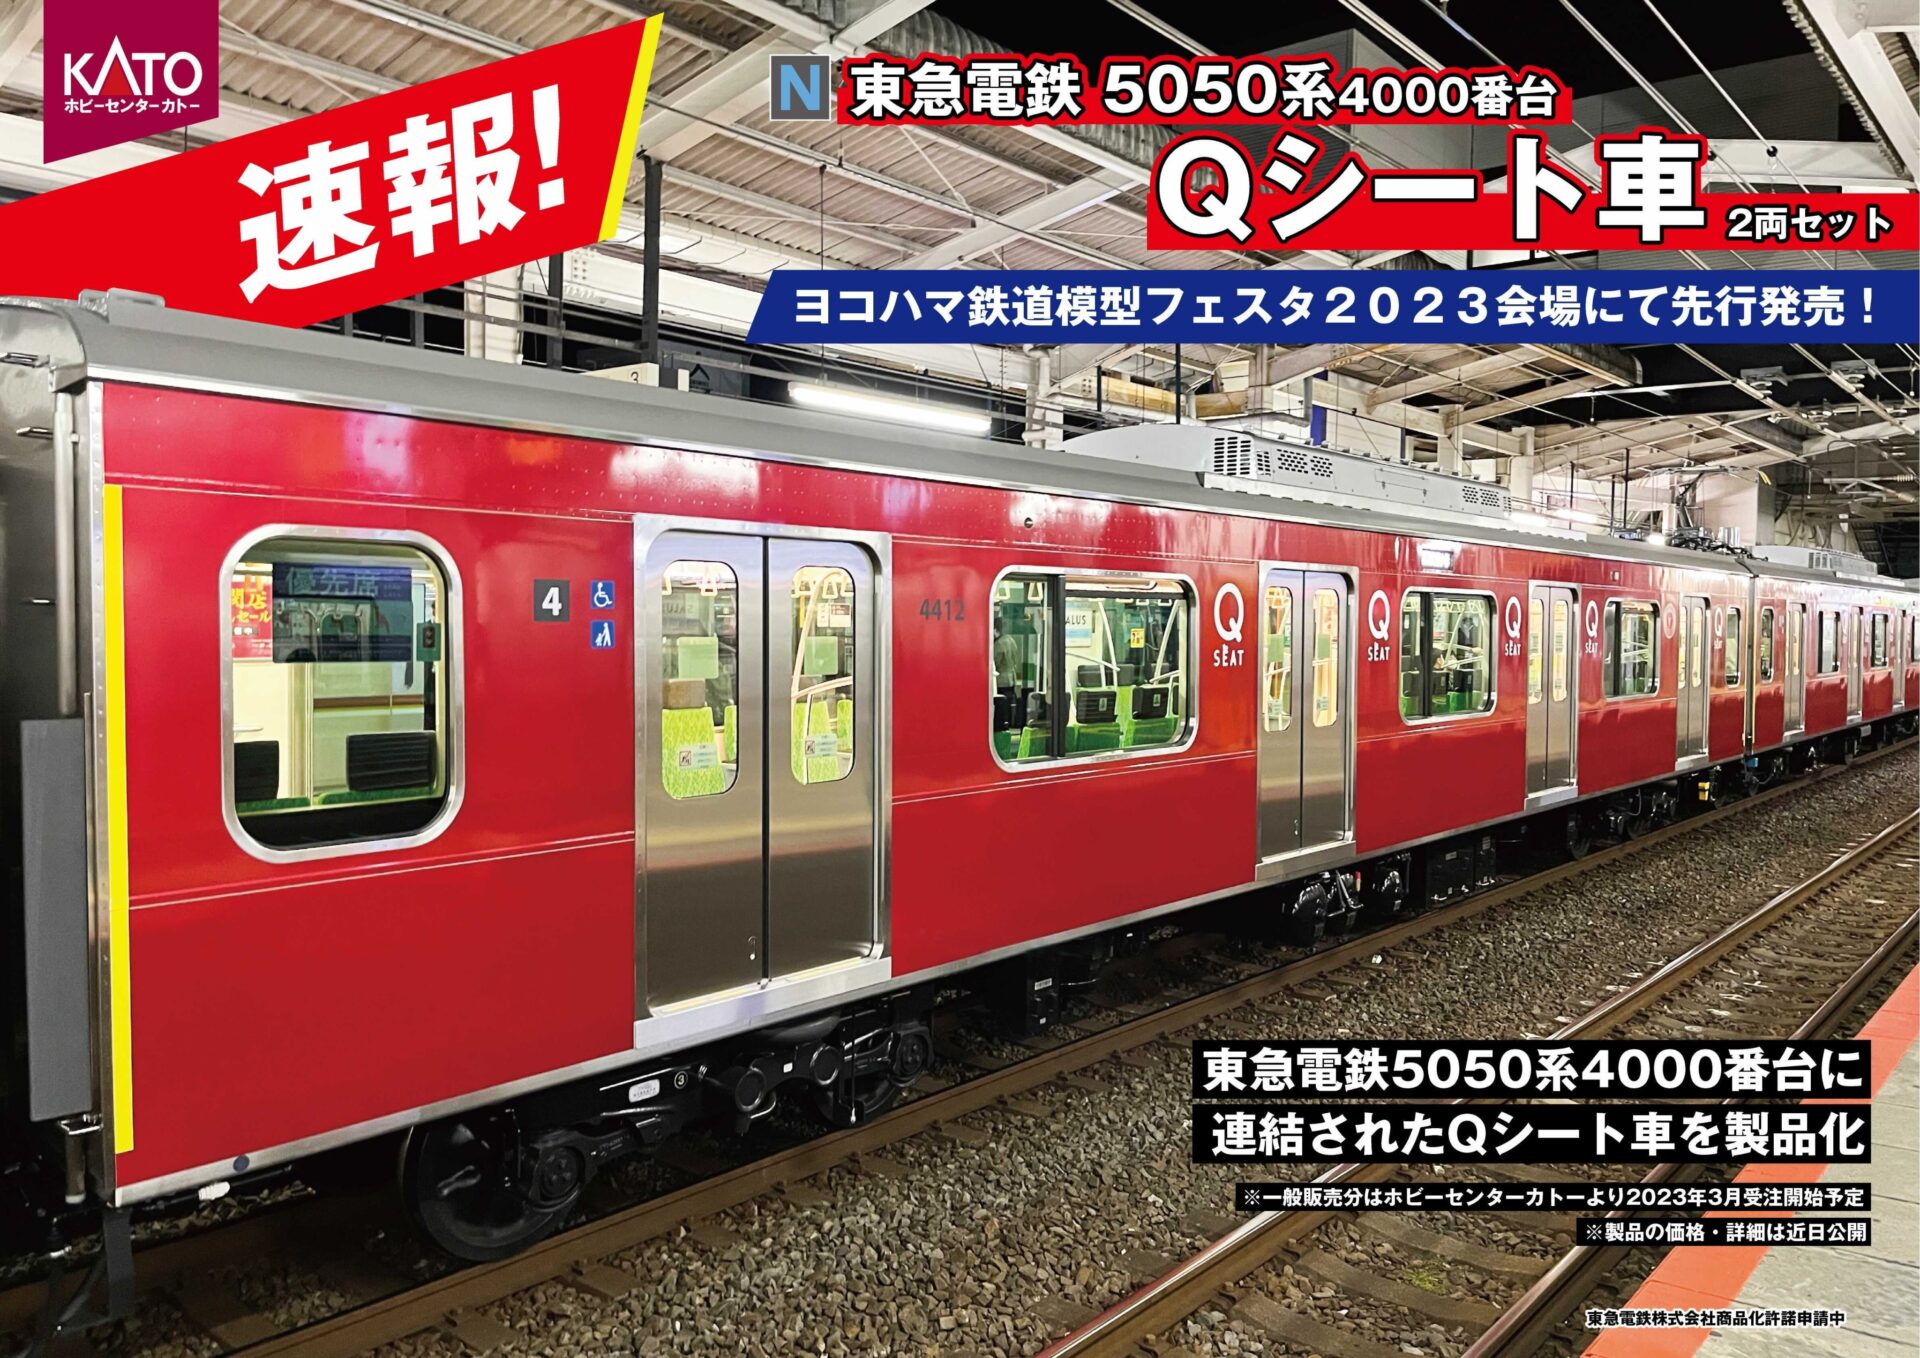 KATO Nゲージ 東急電鉄 5050系4000番台-